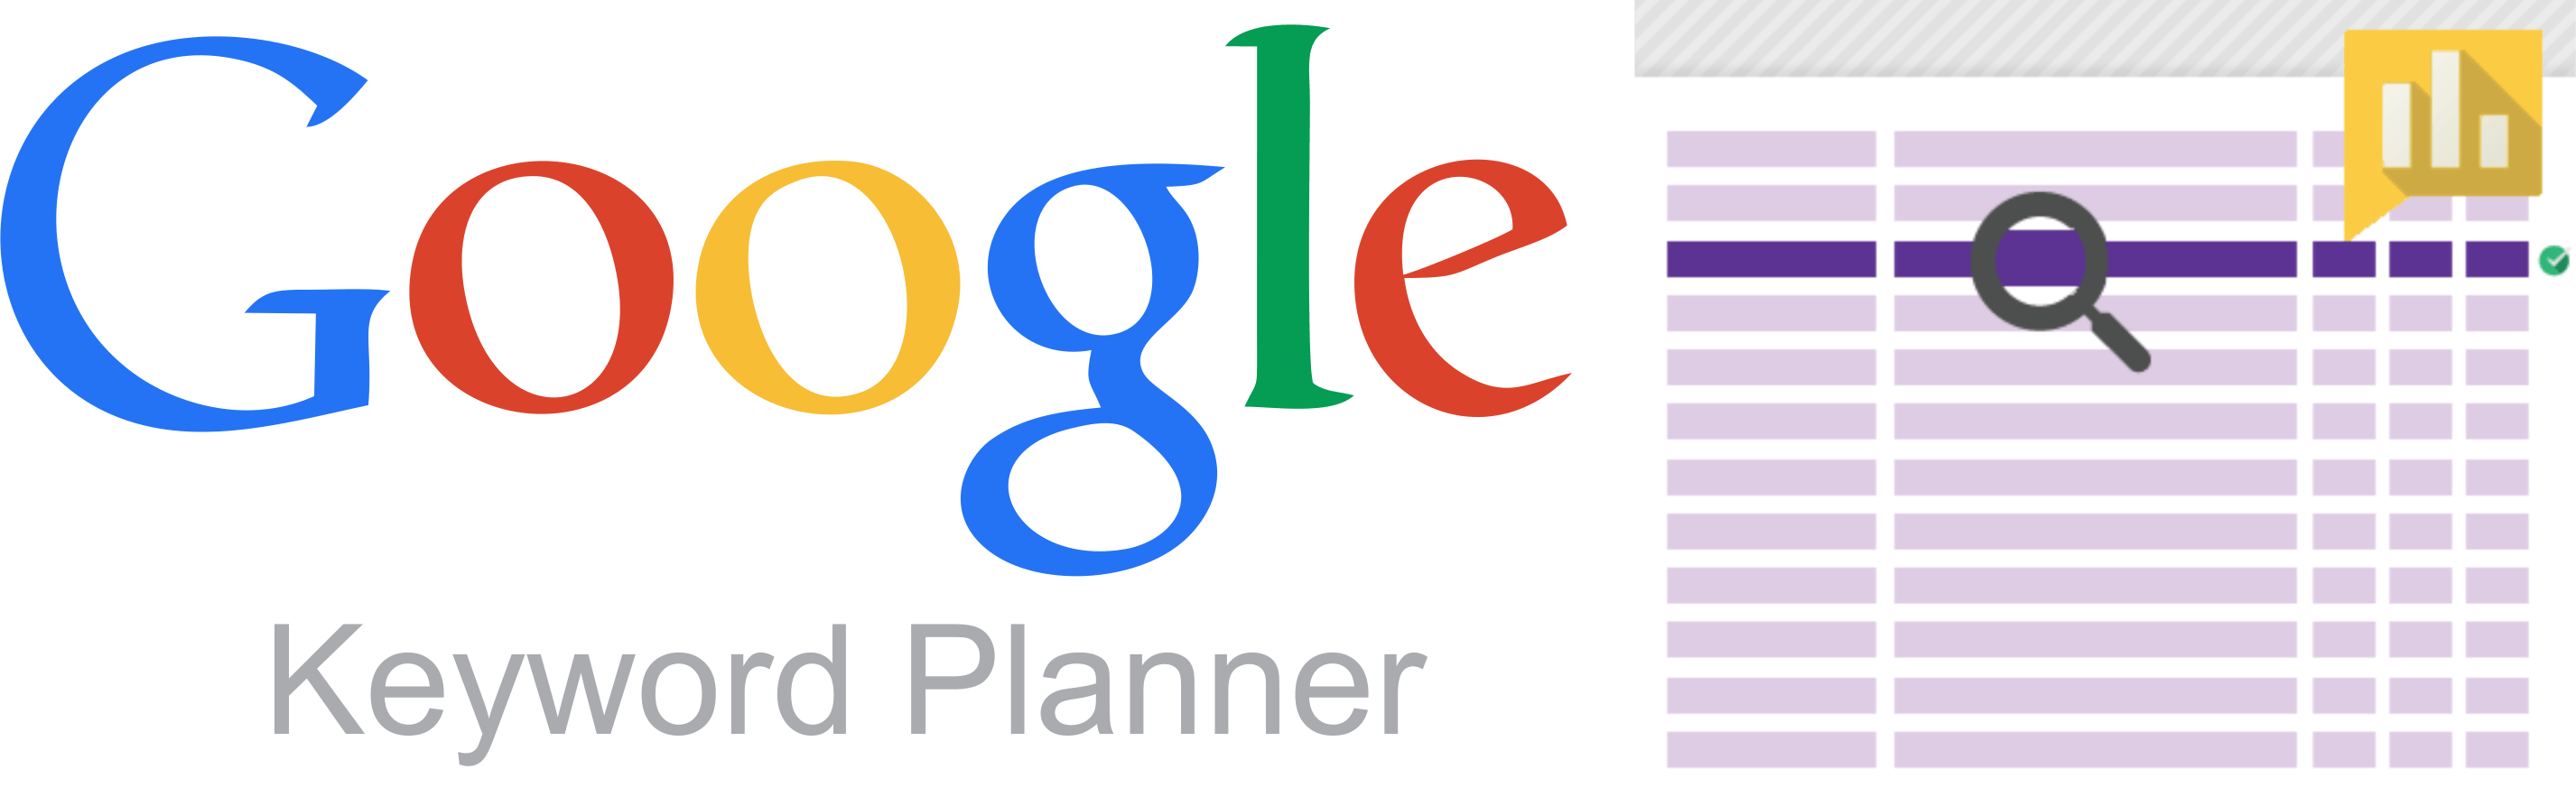 Google Keyword Logo - Google Keyword Planner - Breeze Development